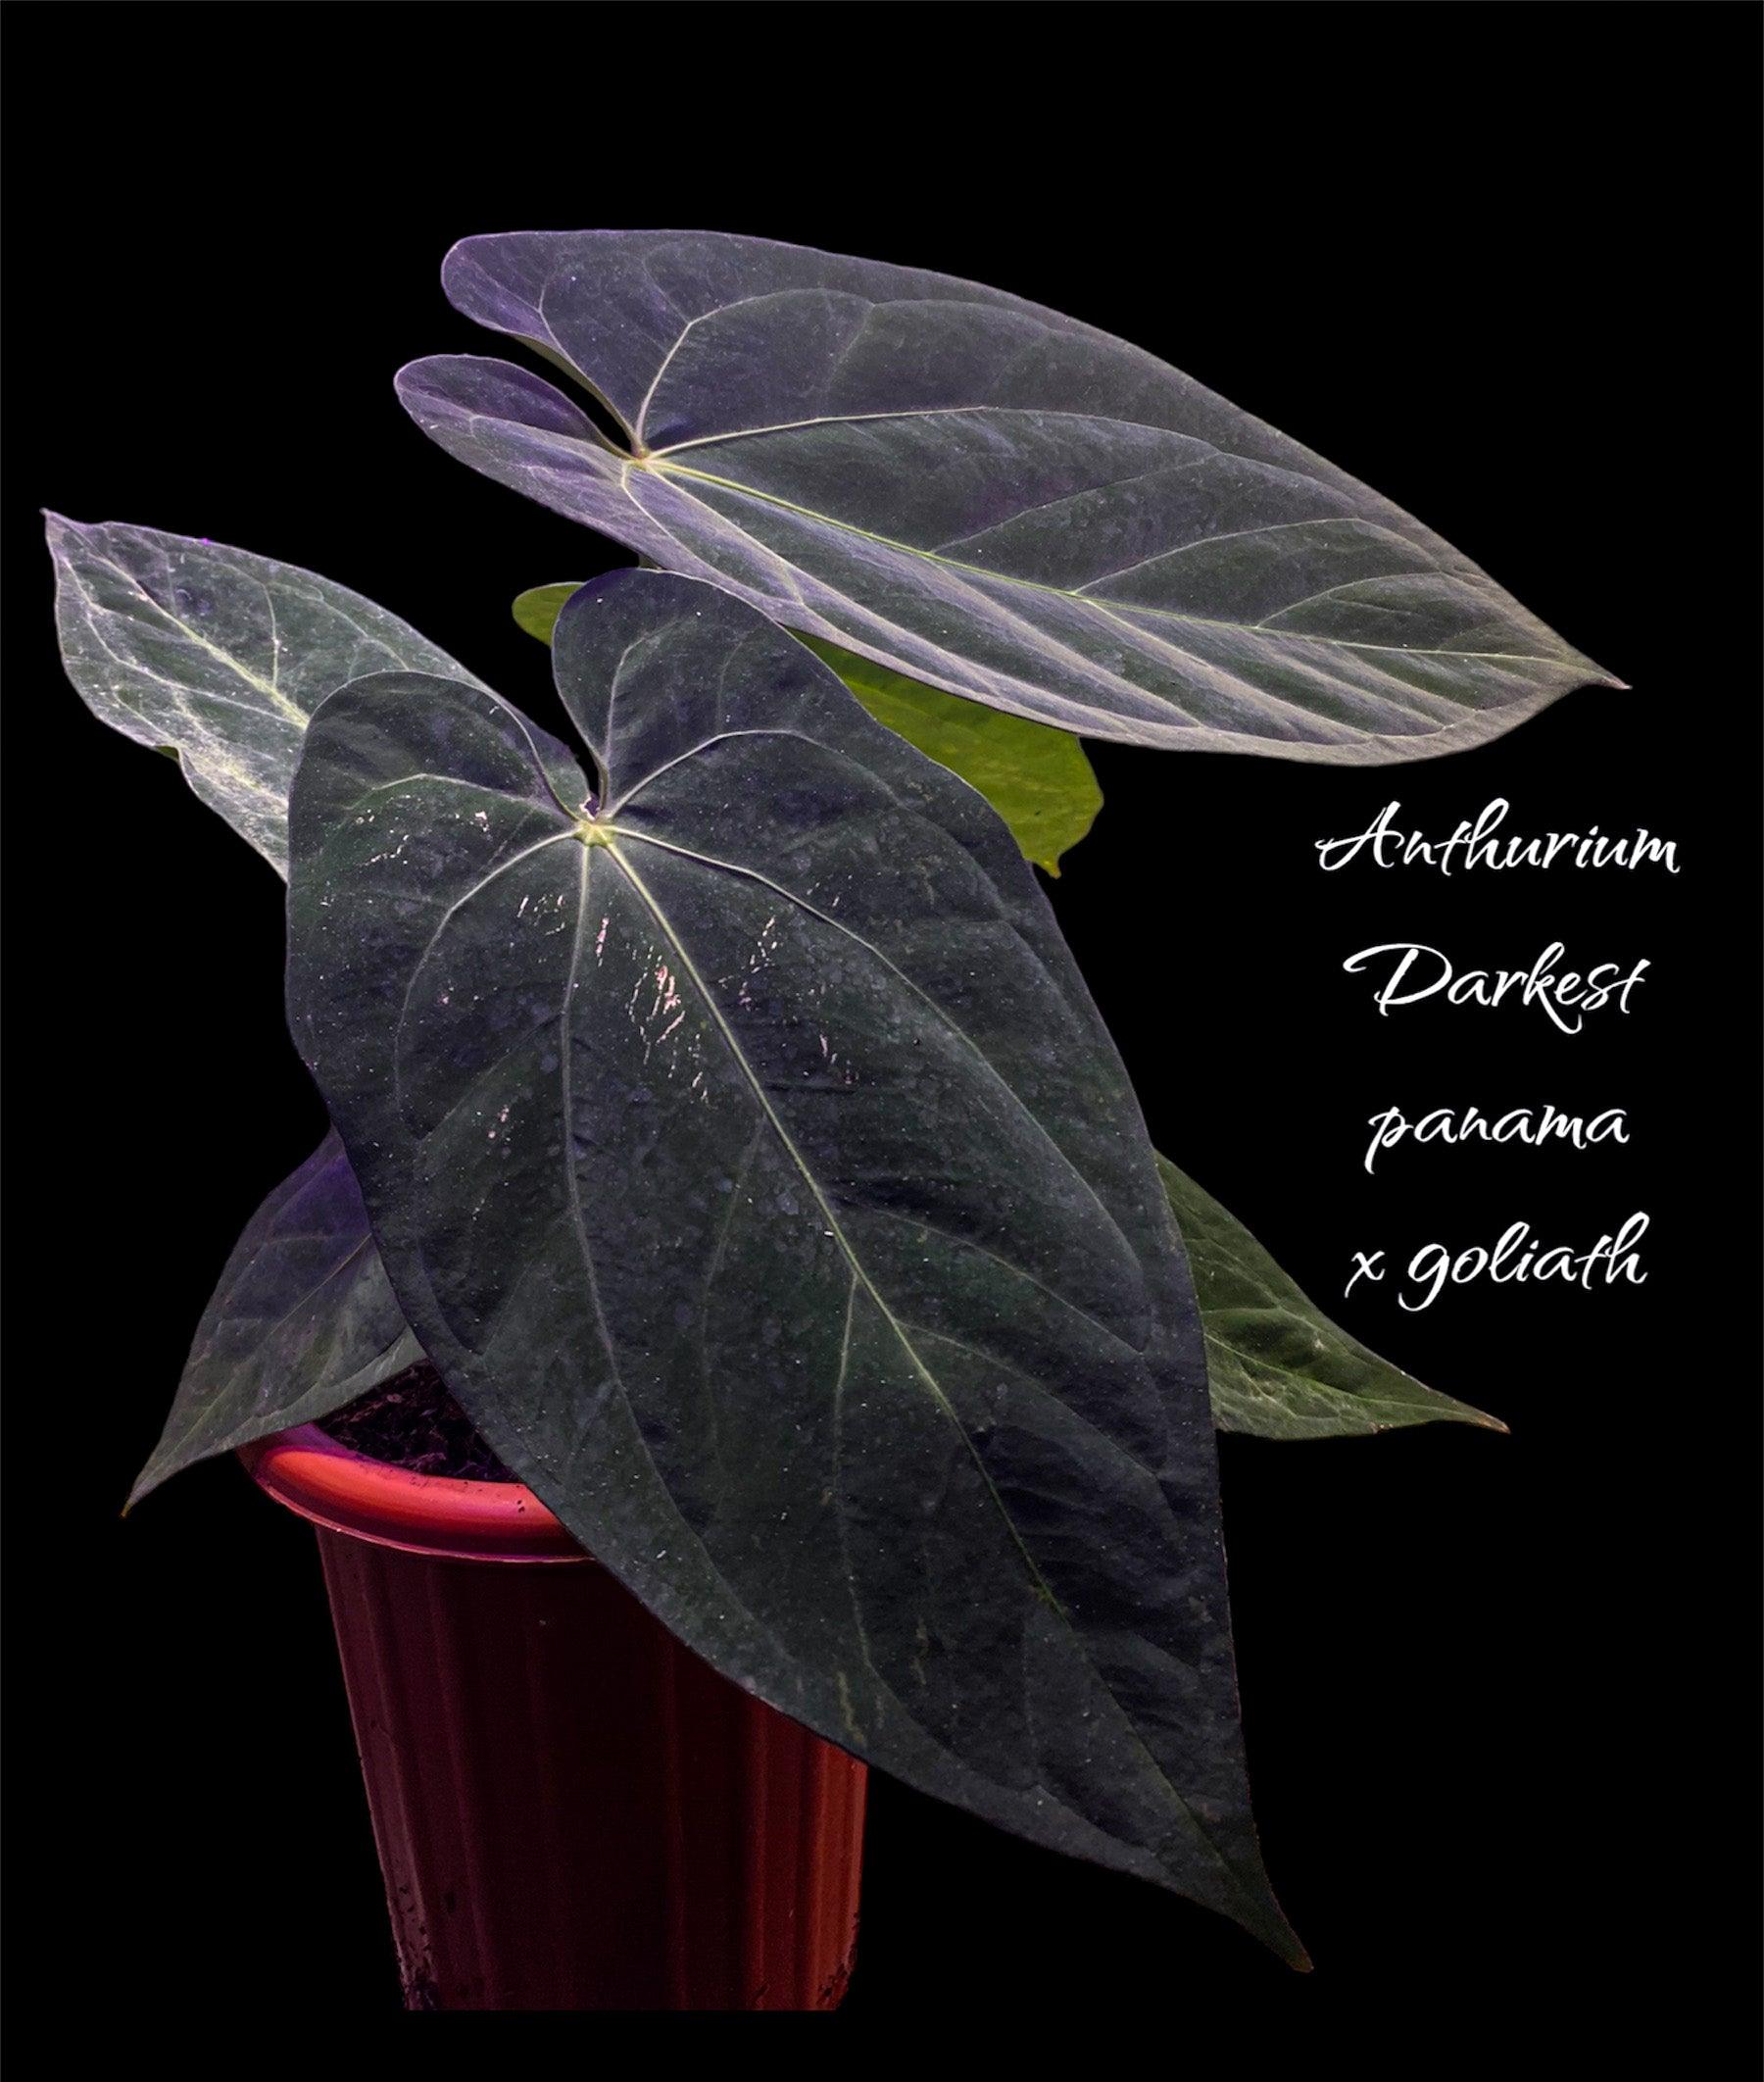 Anthurium darkest x - live sale 20 - Indonesia Plant